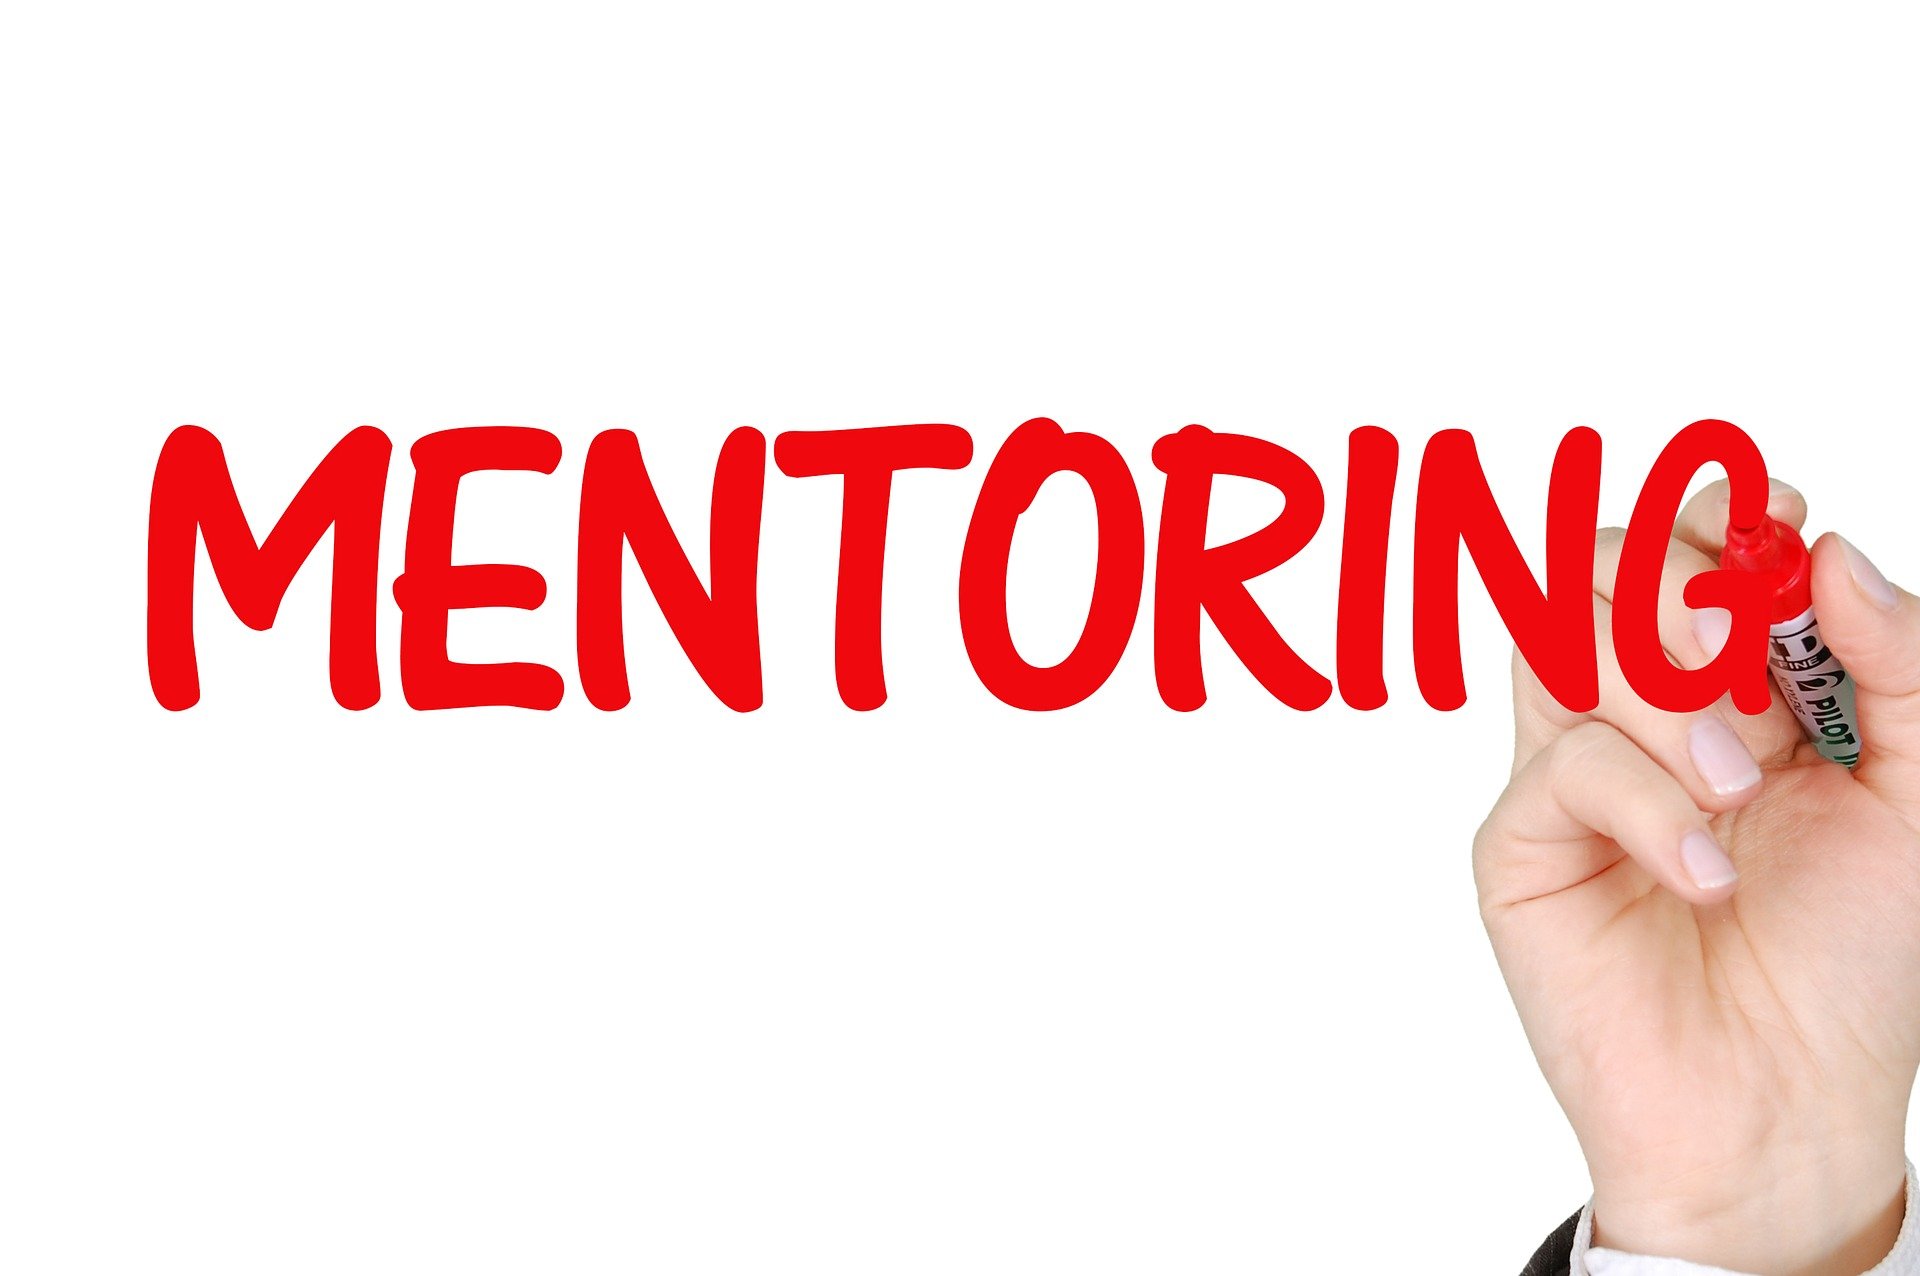 mentoring-2738524_1920.jpg